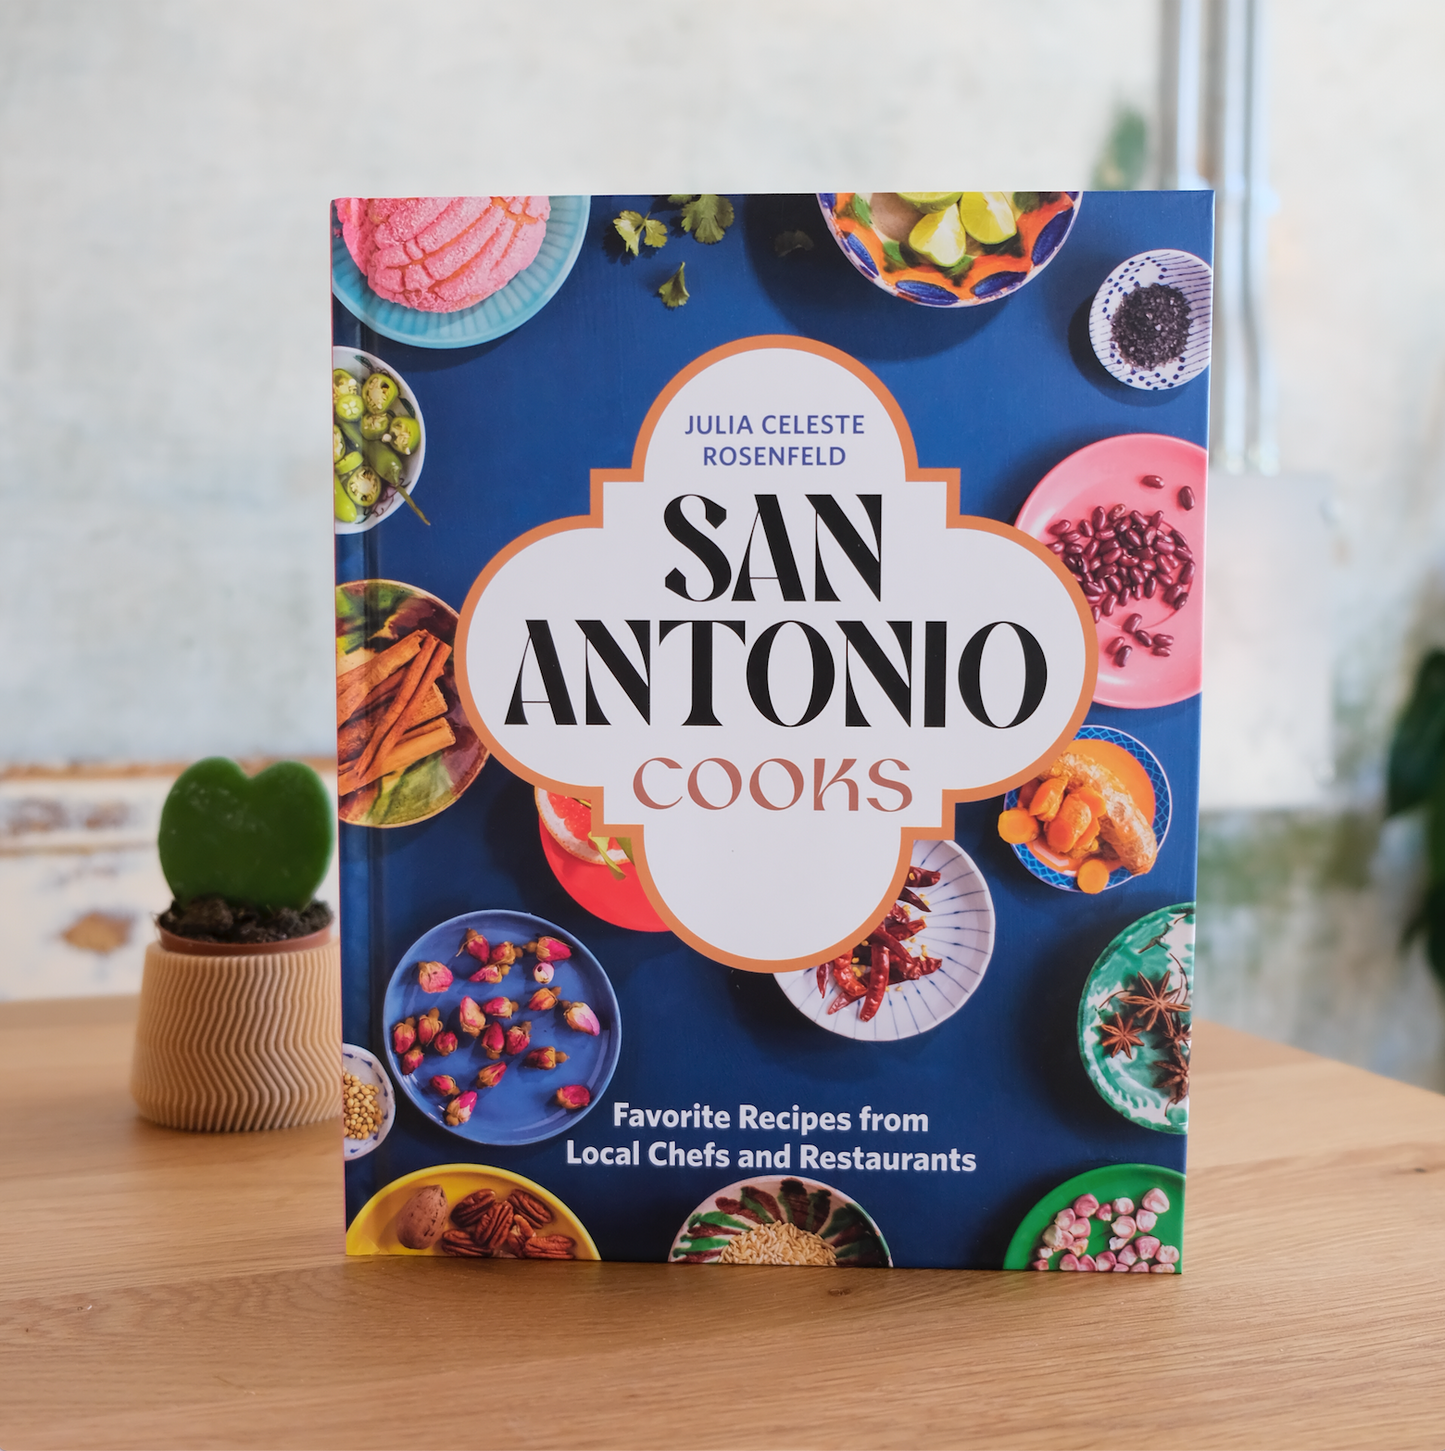 "San Antonio Cooks: Favorite Recipes from Local Chefs and Restaurants” by Julia Celeste Rosenfeld